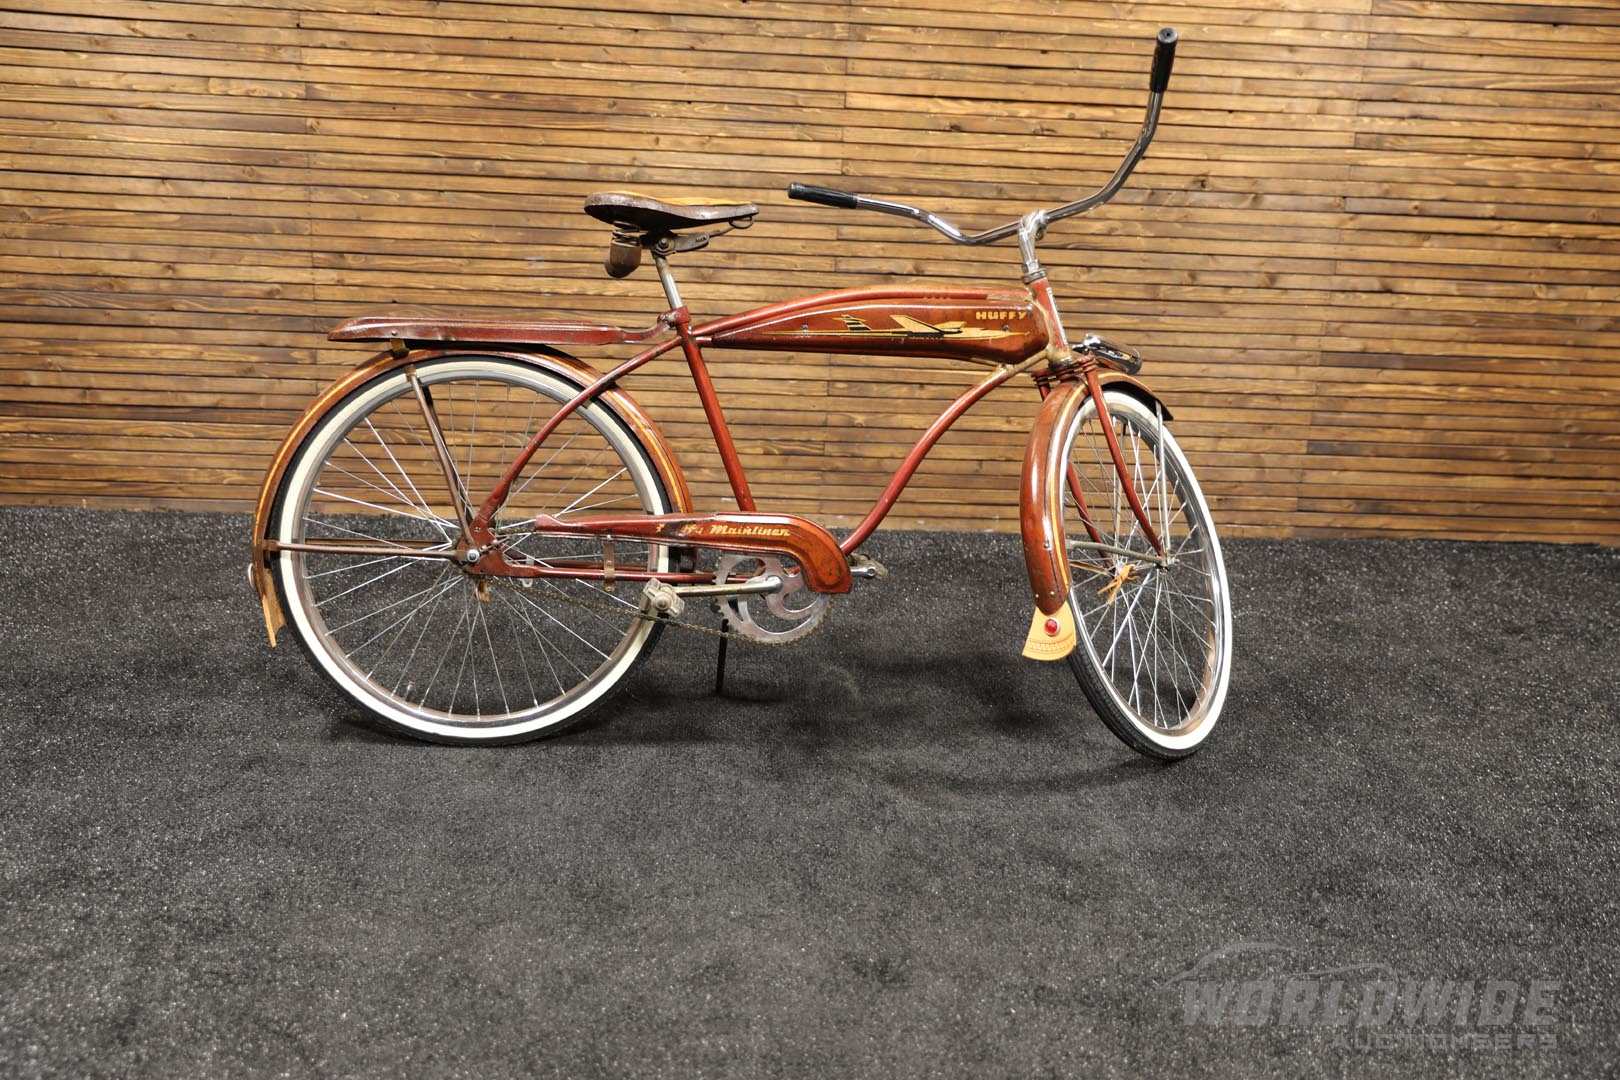  1956 Huffy Mainline Bicycle -  Original 